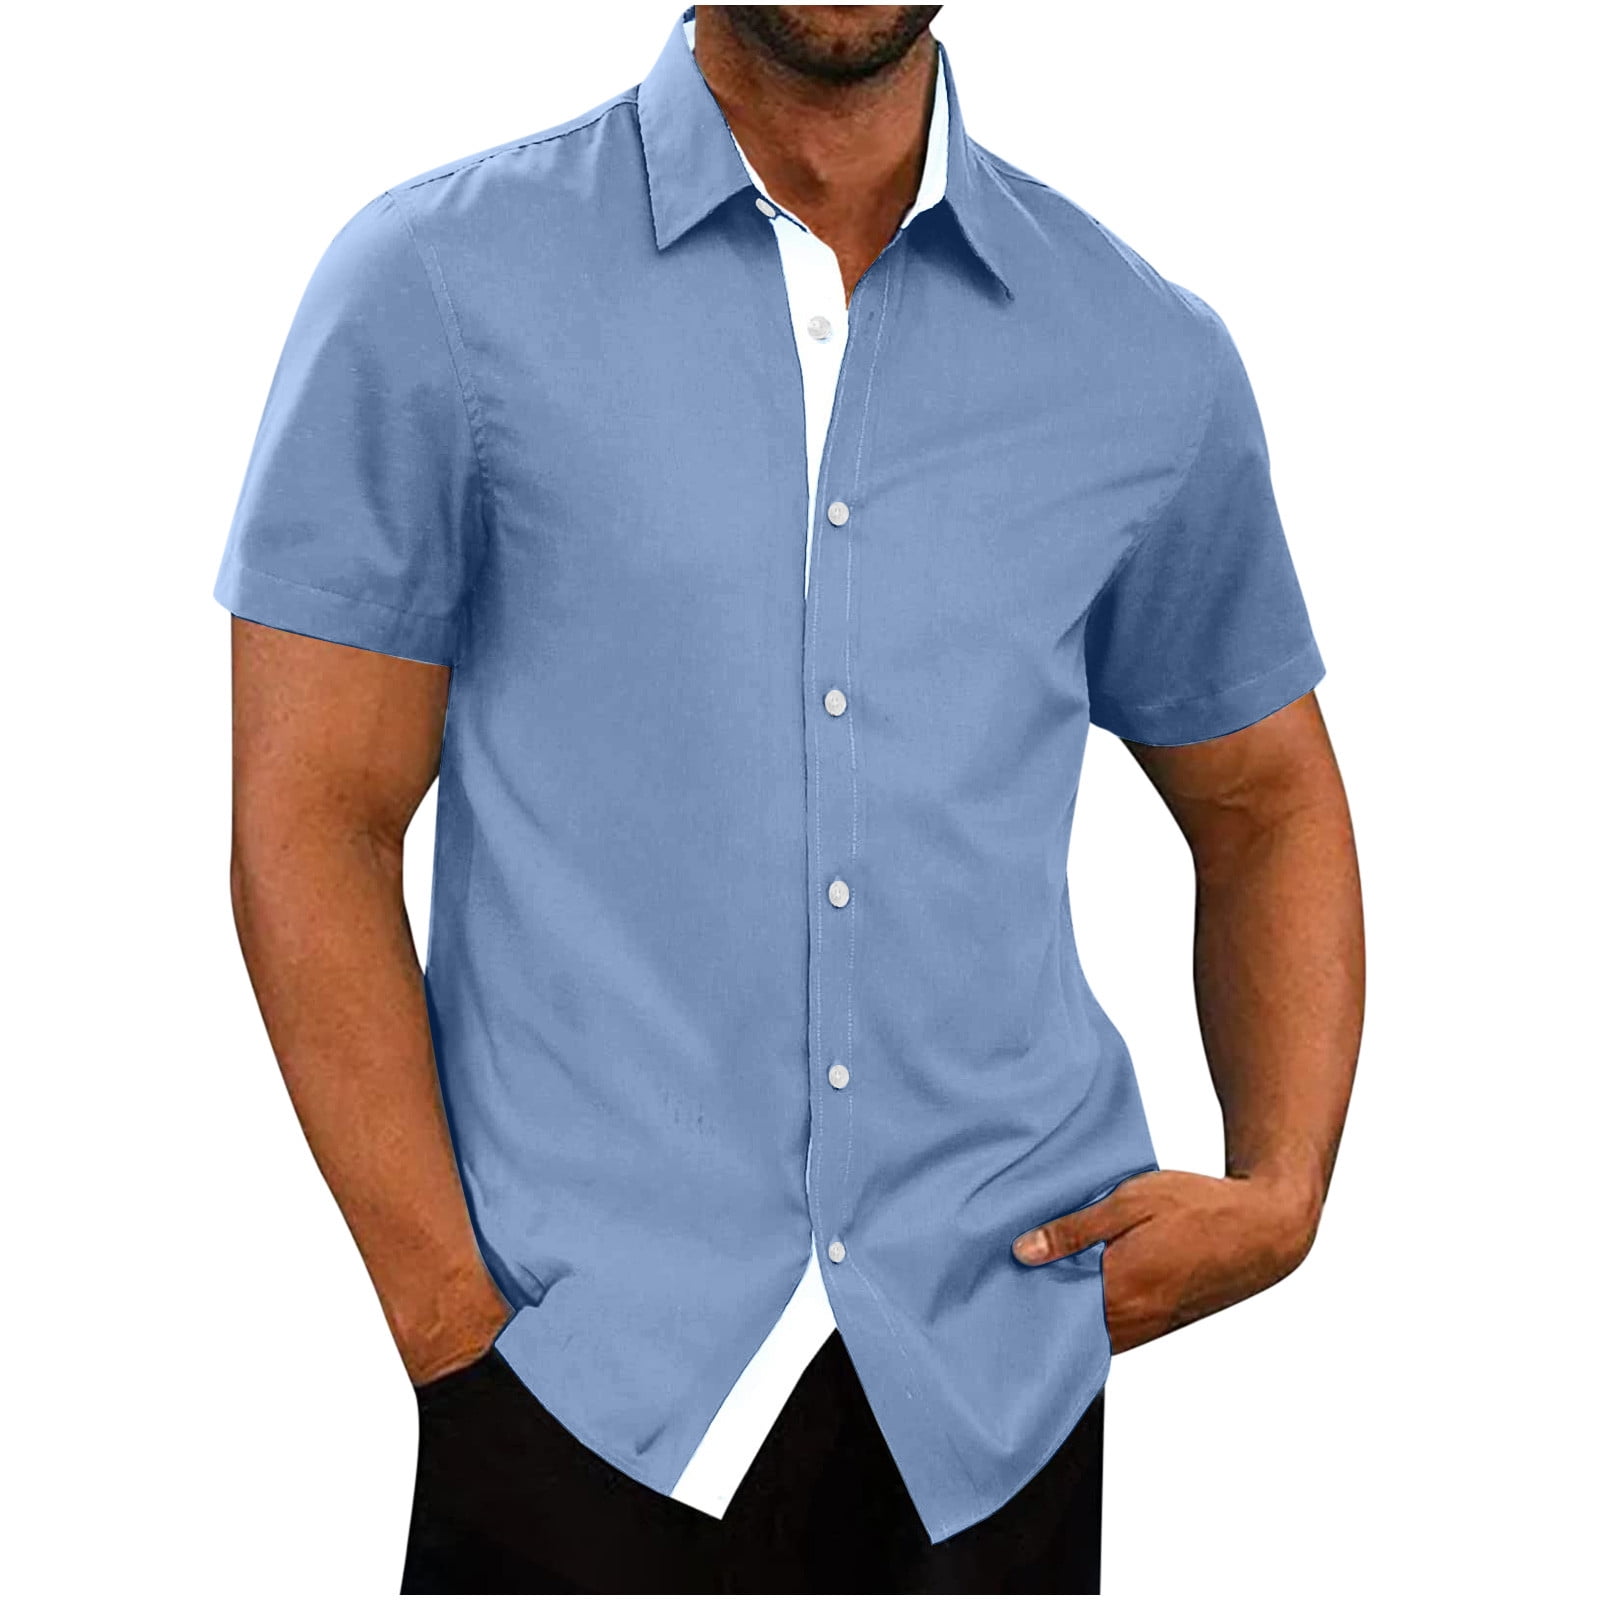 RYRJJ Men's Short Sleeve Dress Shirts Casual Button Down Shirts Wrinkle ...